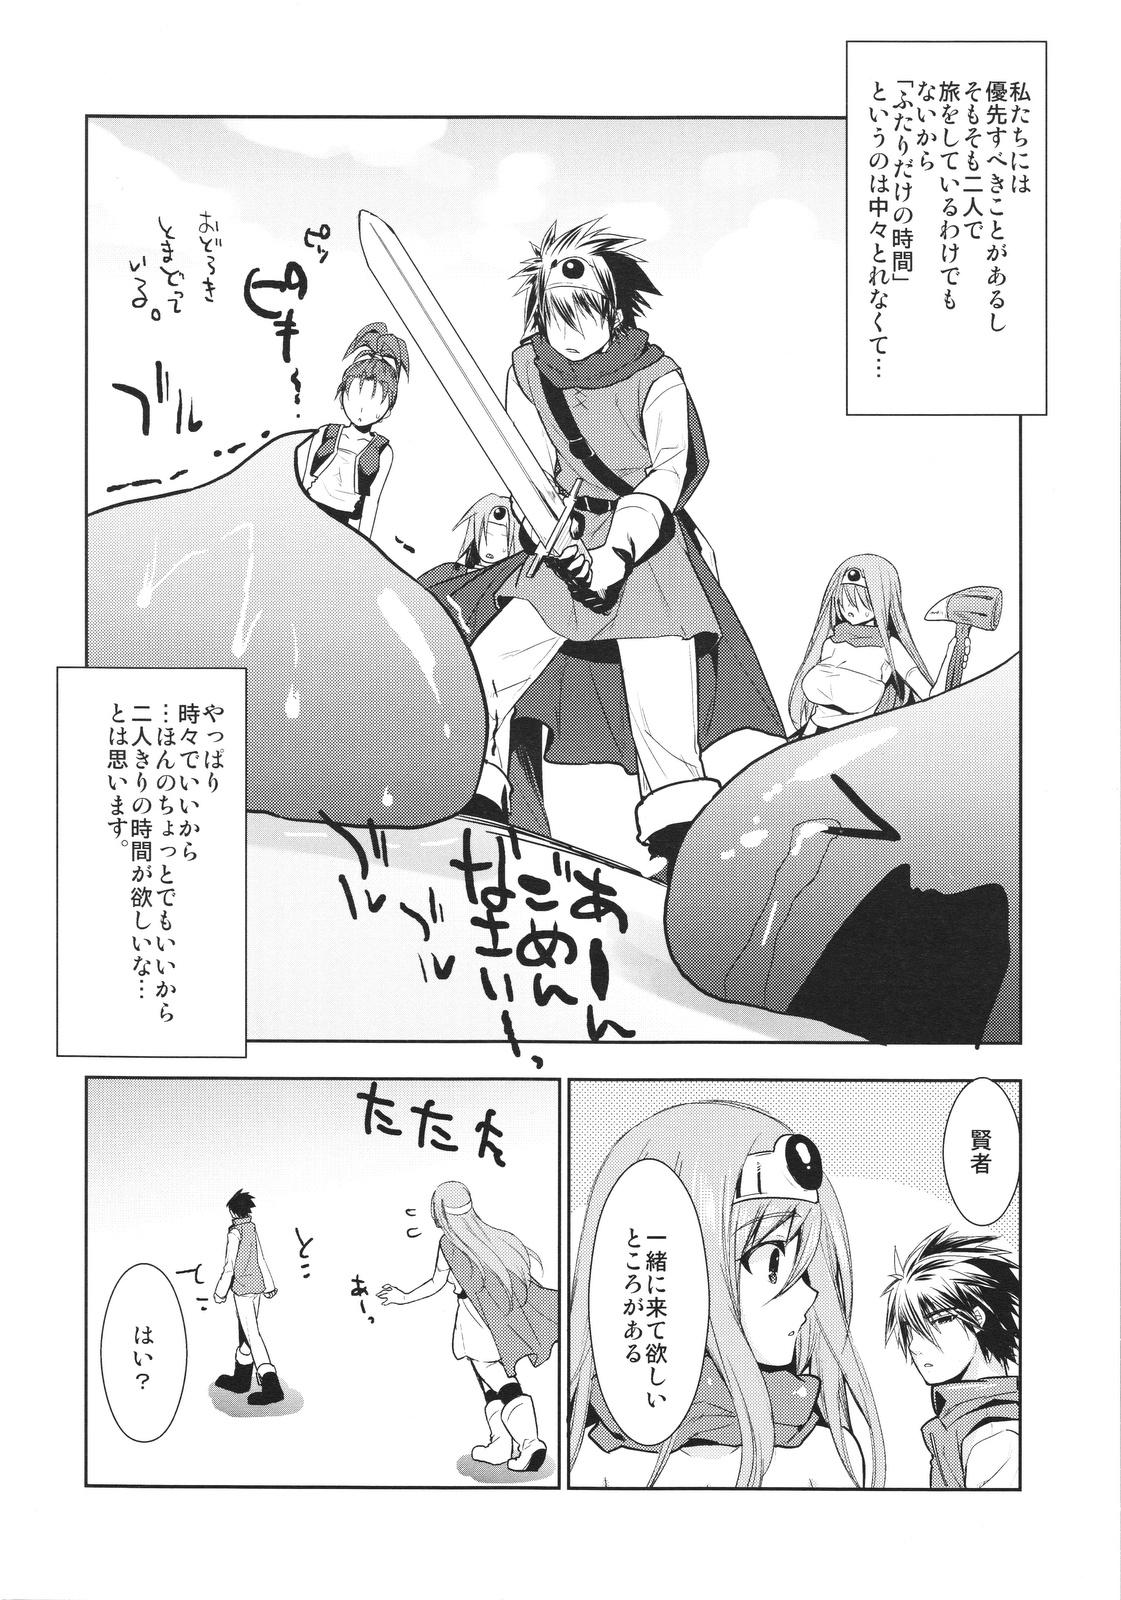 Teenie LOVEHERO.18 - Dragon quest iii Gape - Page 5